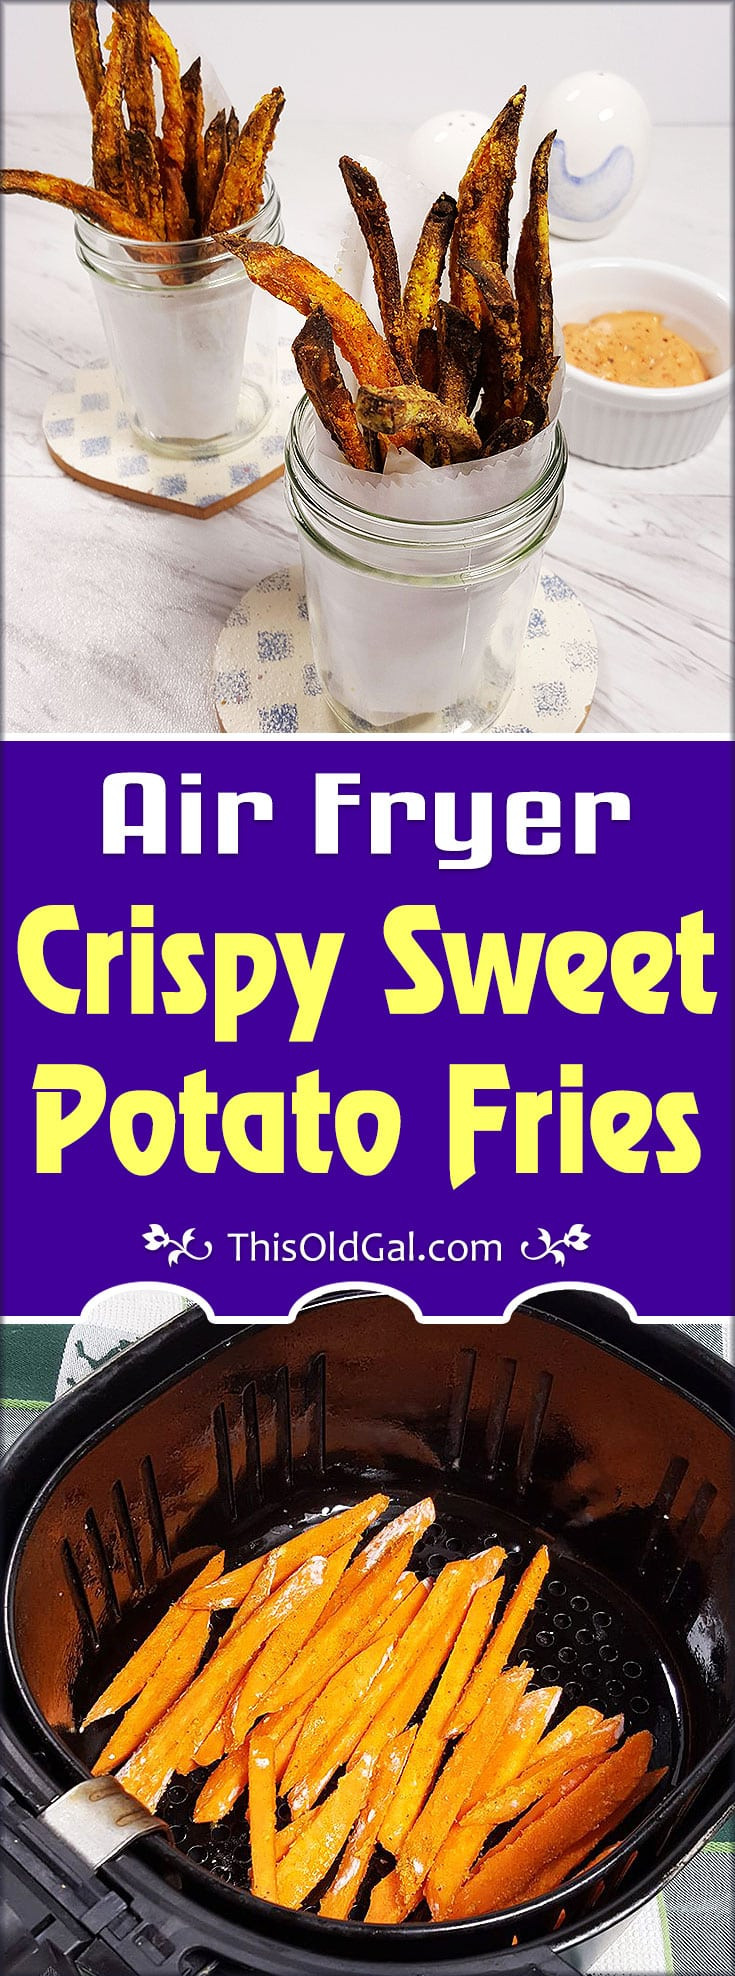 Sweet Potato Fries Air Fryer
 Air Fryer Crispy Sweet Potato Fries